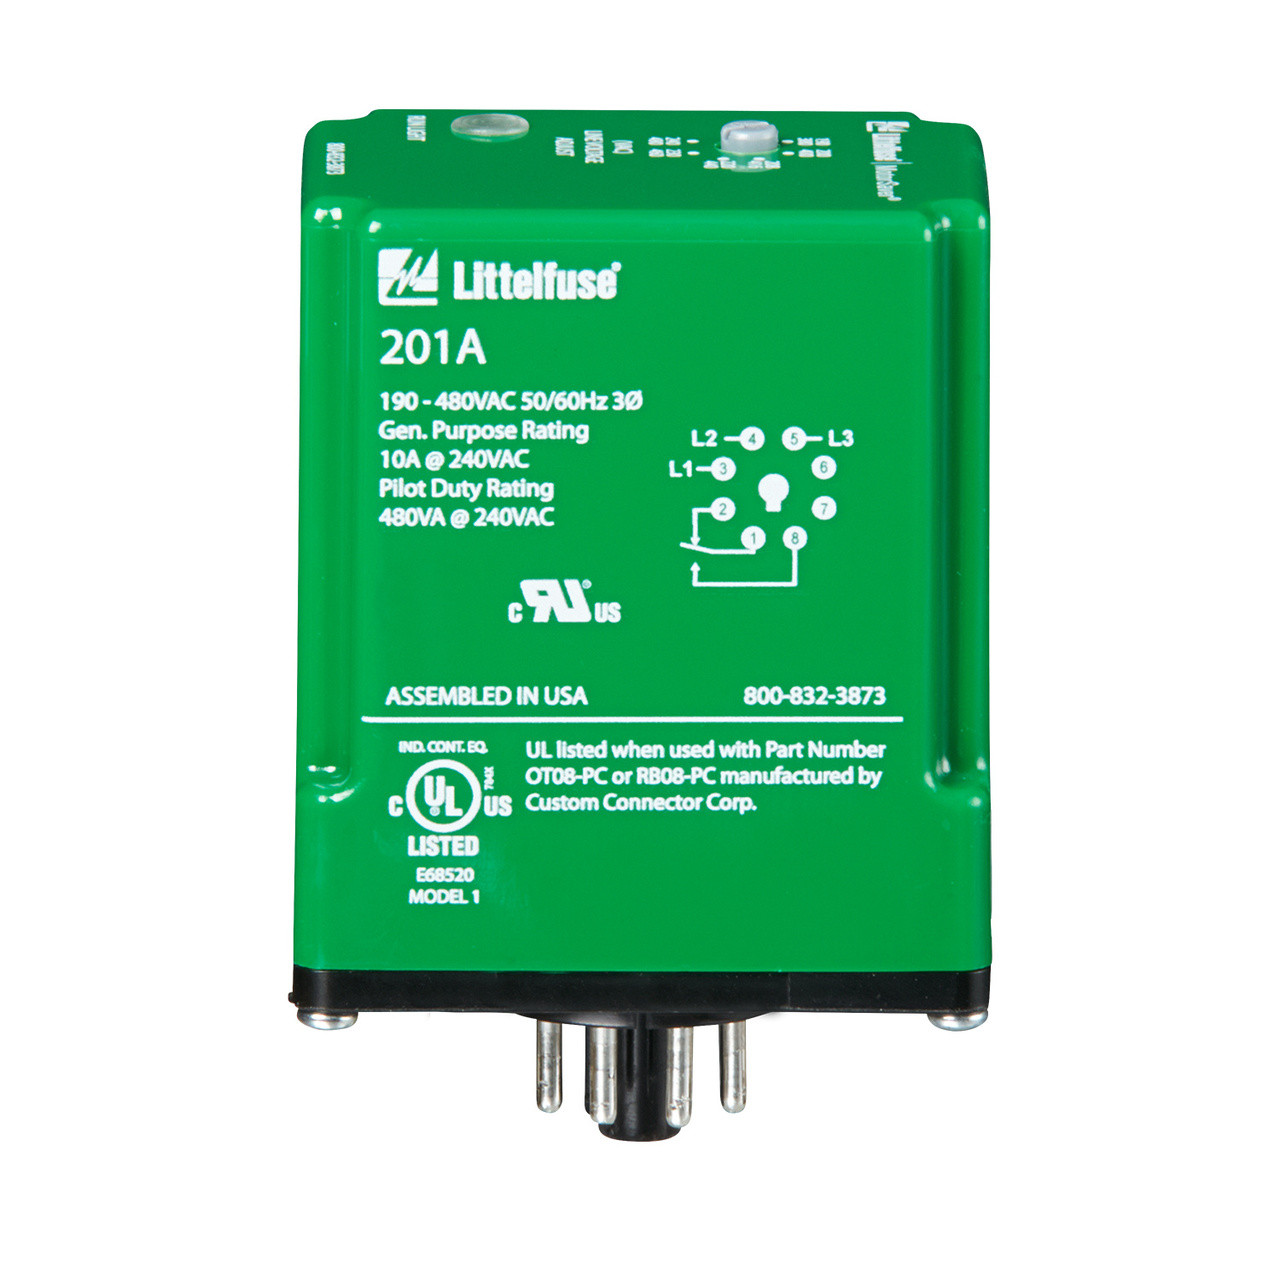 Littelfuse-Symcom 201A Voltage Monitor Relays